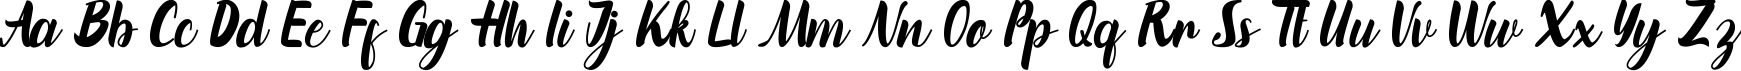 Пример написания английского алфавита шрифтом marinto